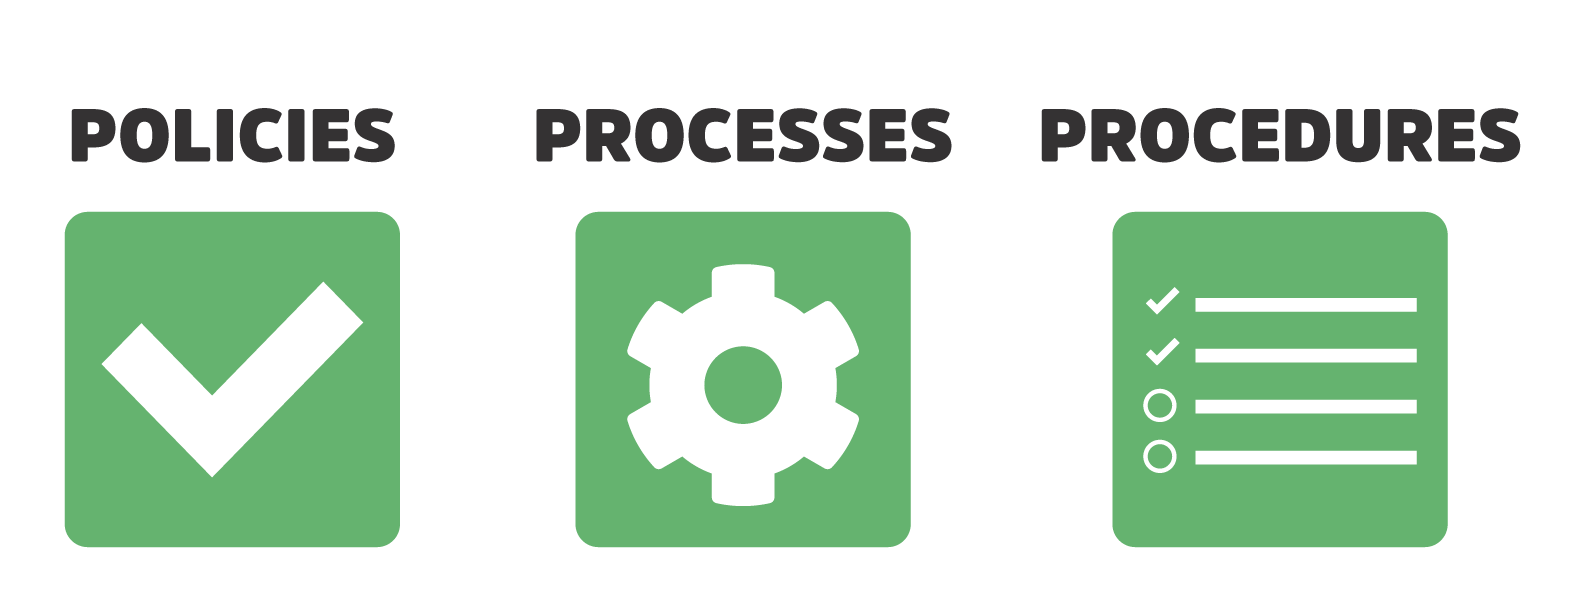 Policies-processes-procedures-icons